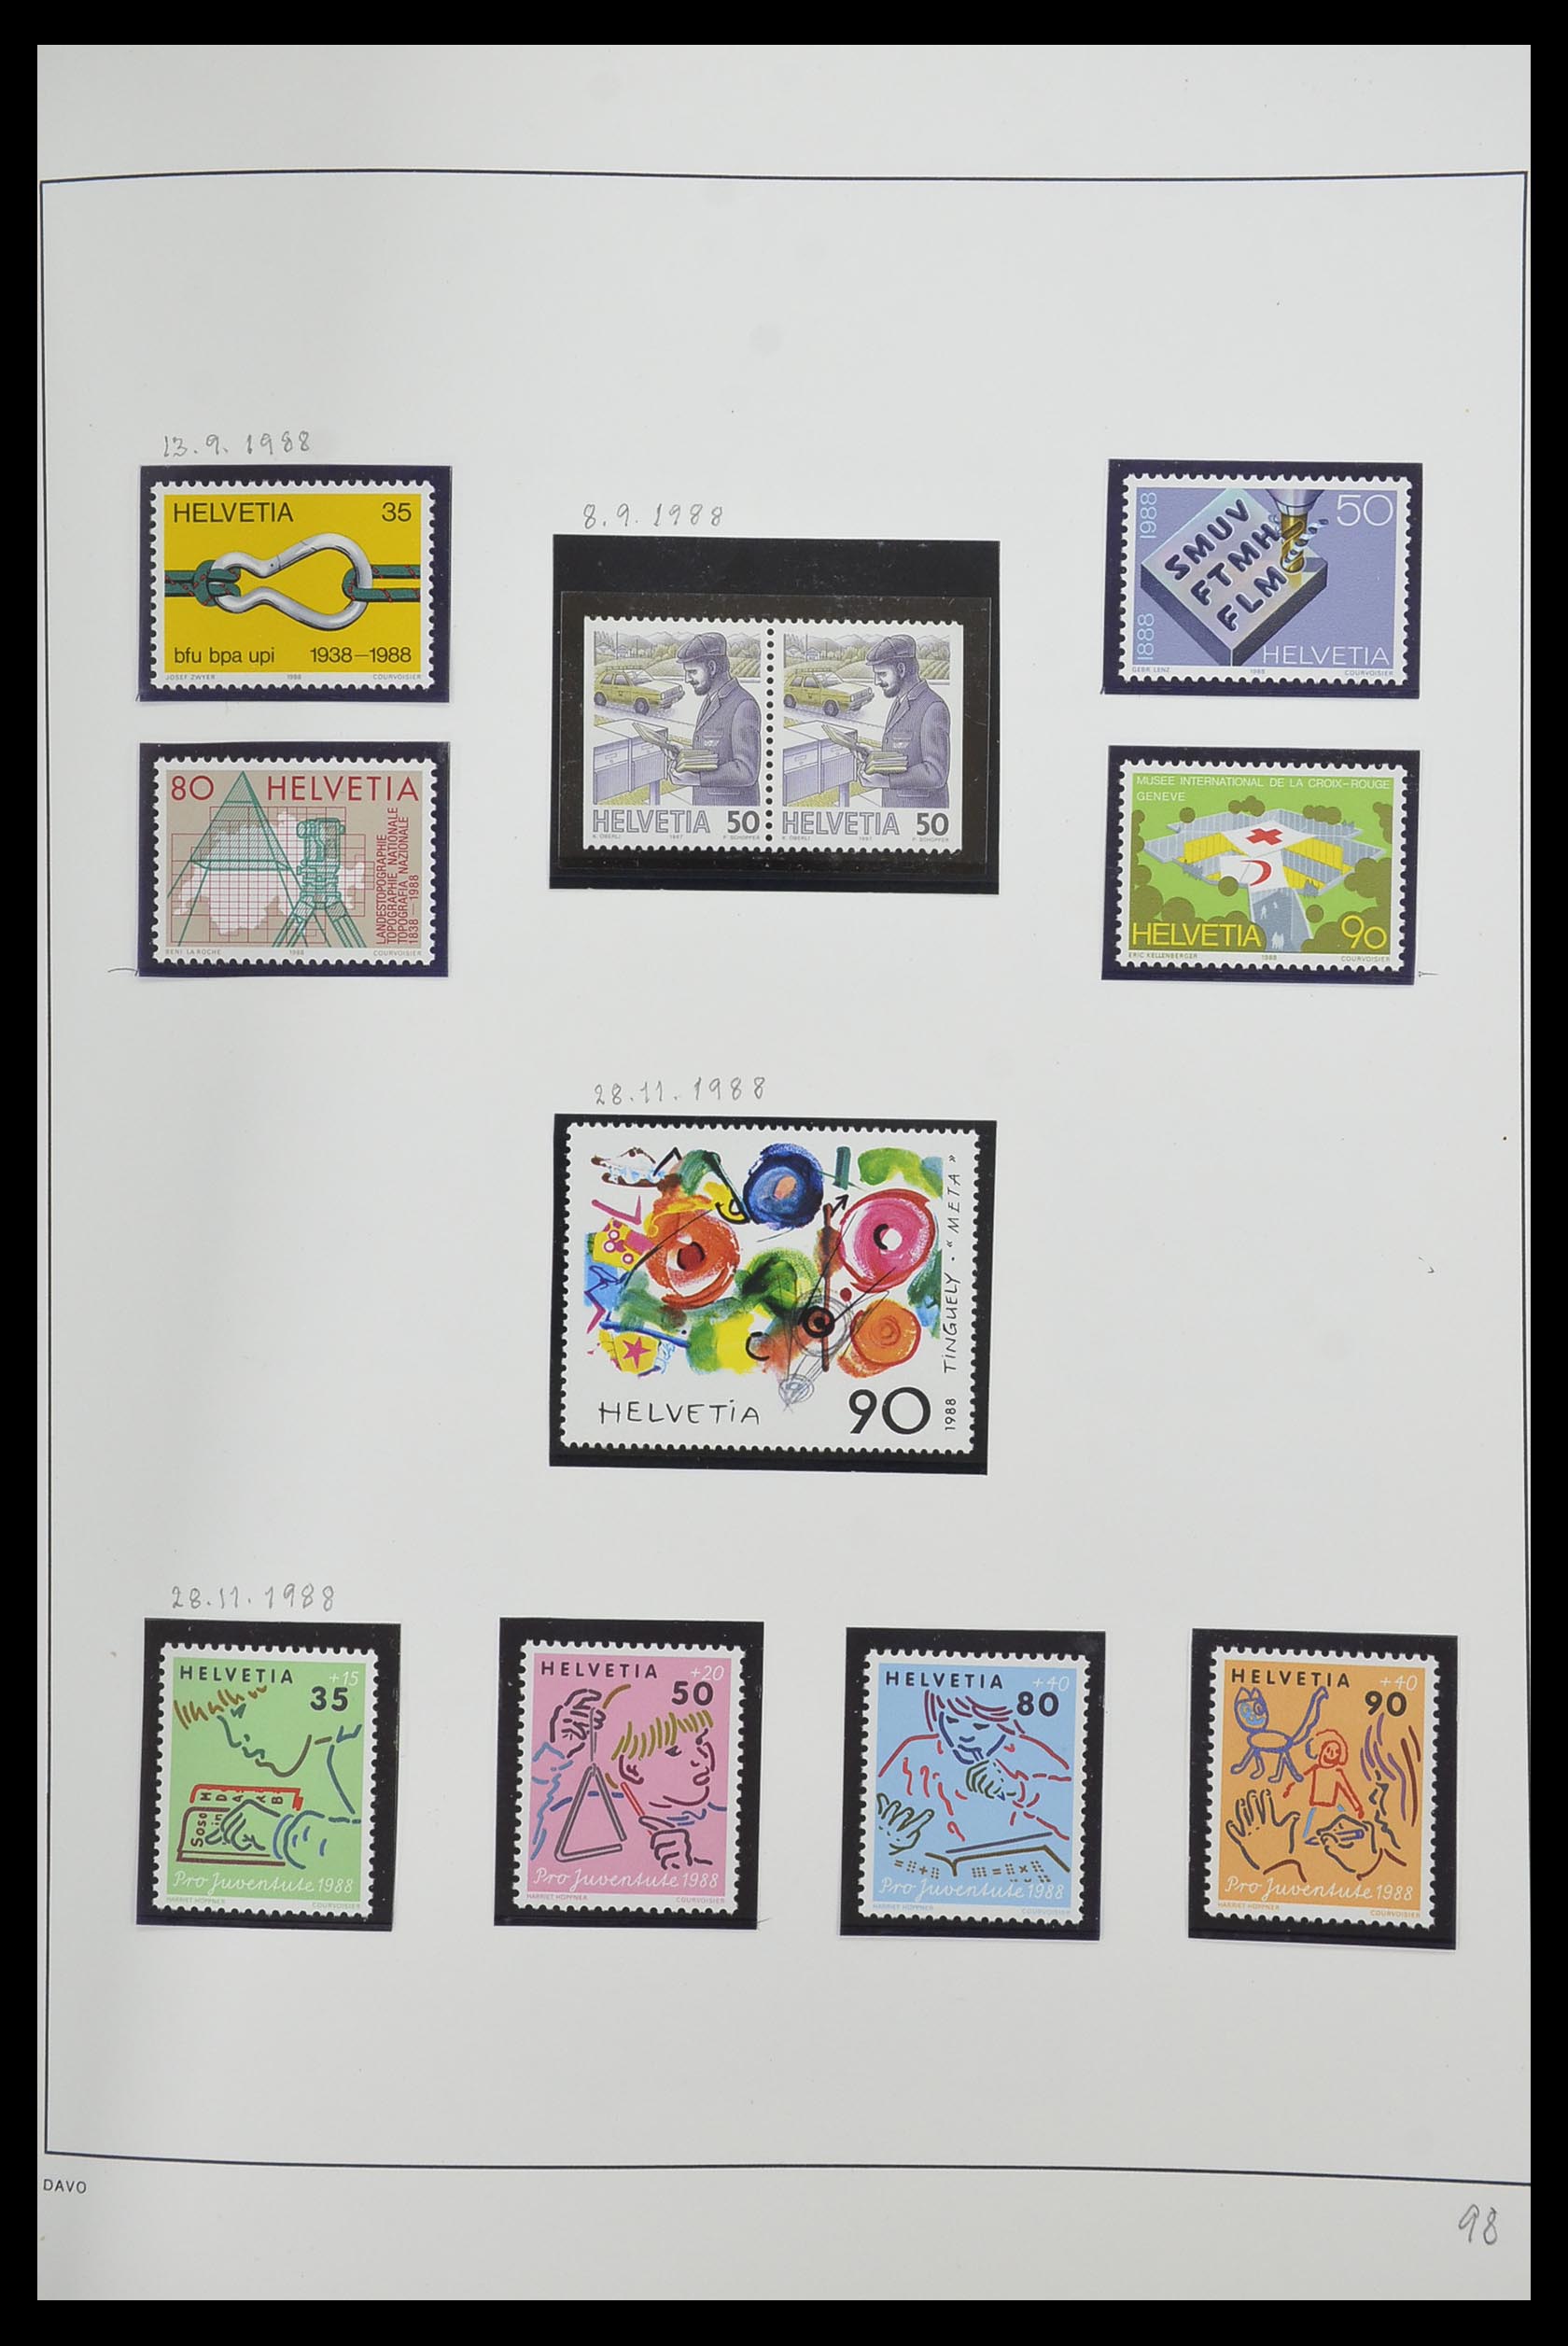 33556 100 - Stamp collection 33556 Switzerland 1862-2000.